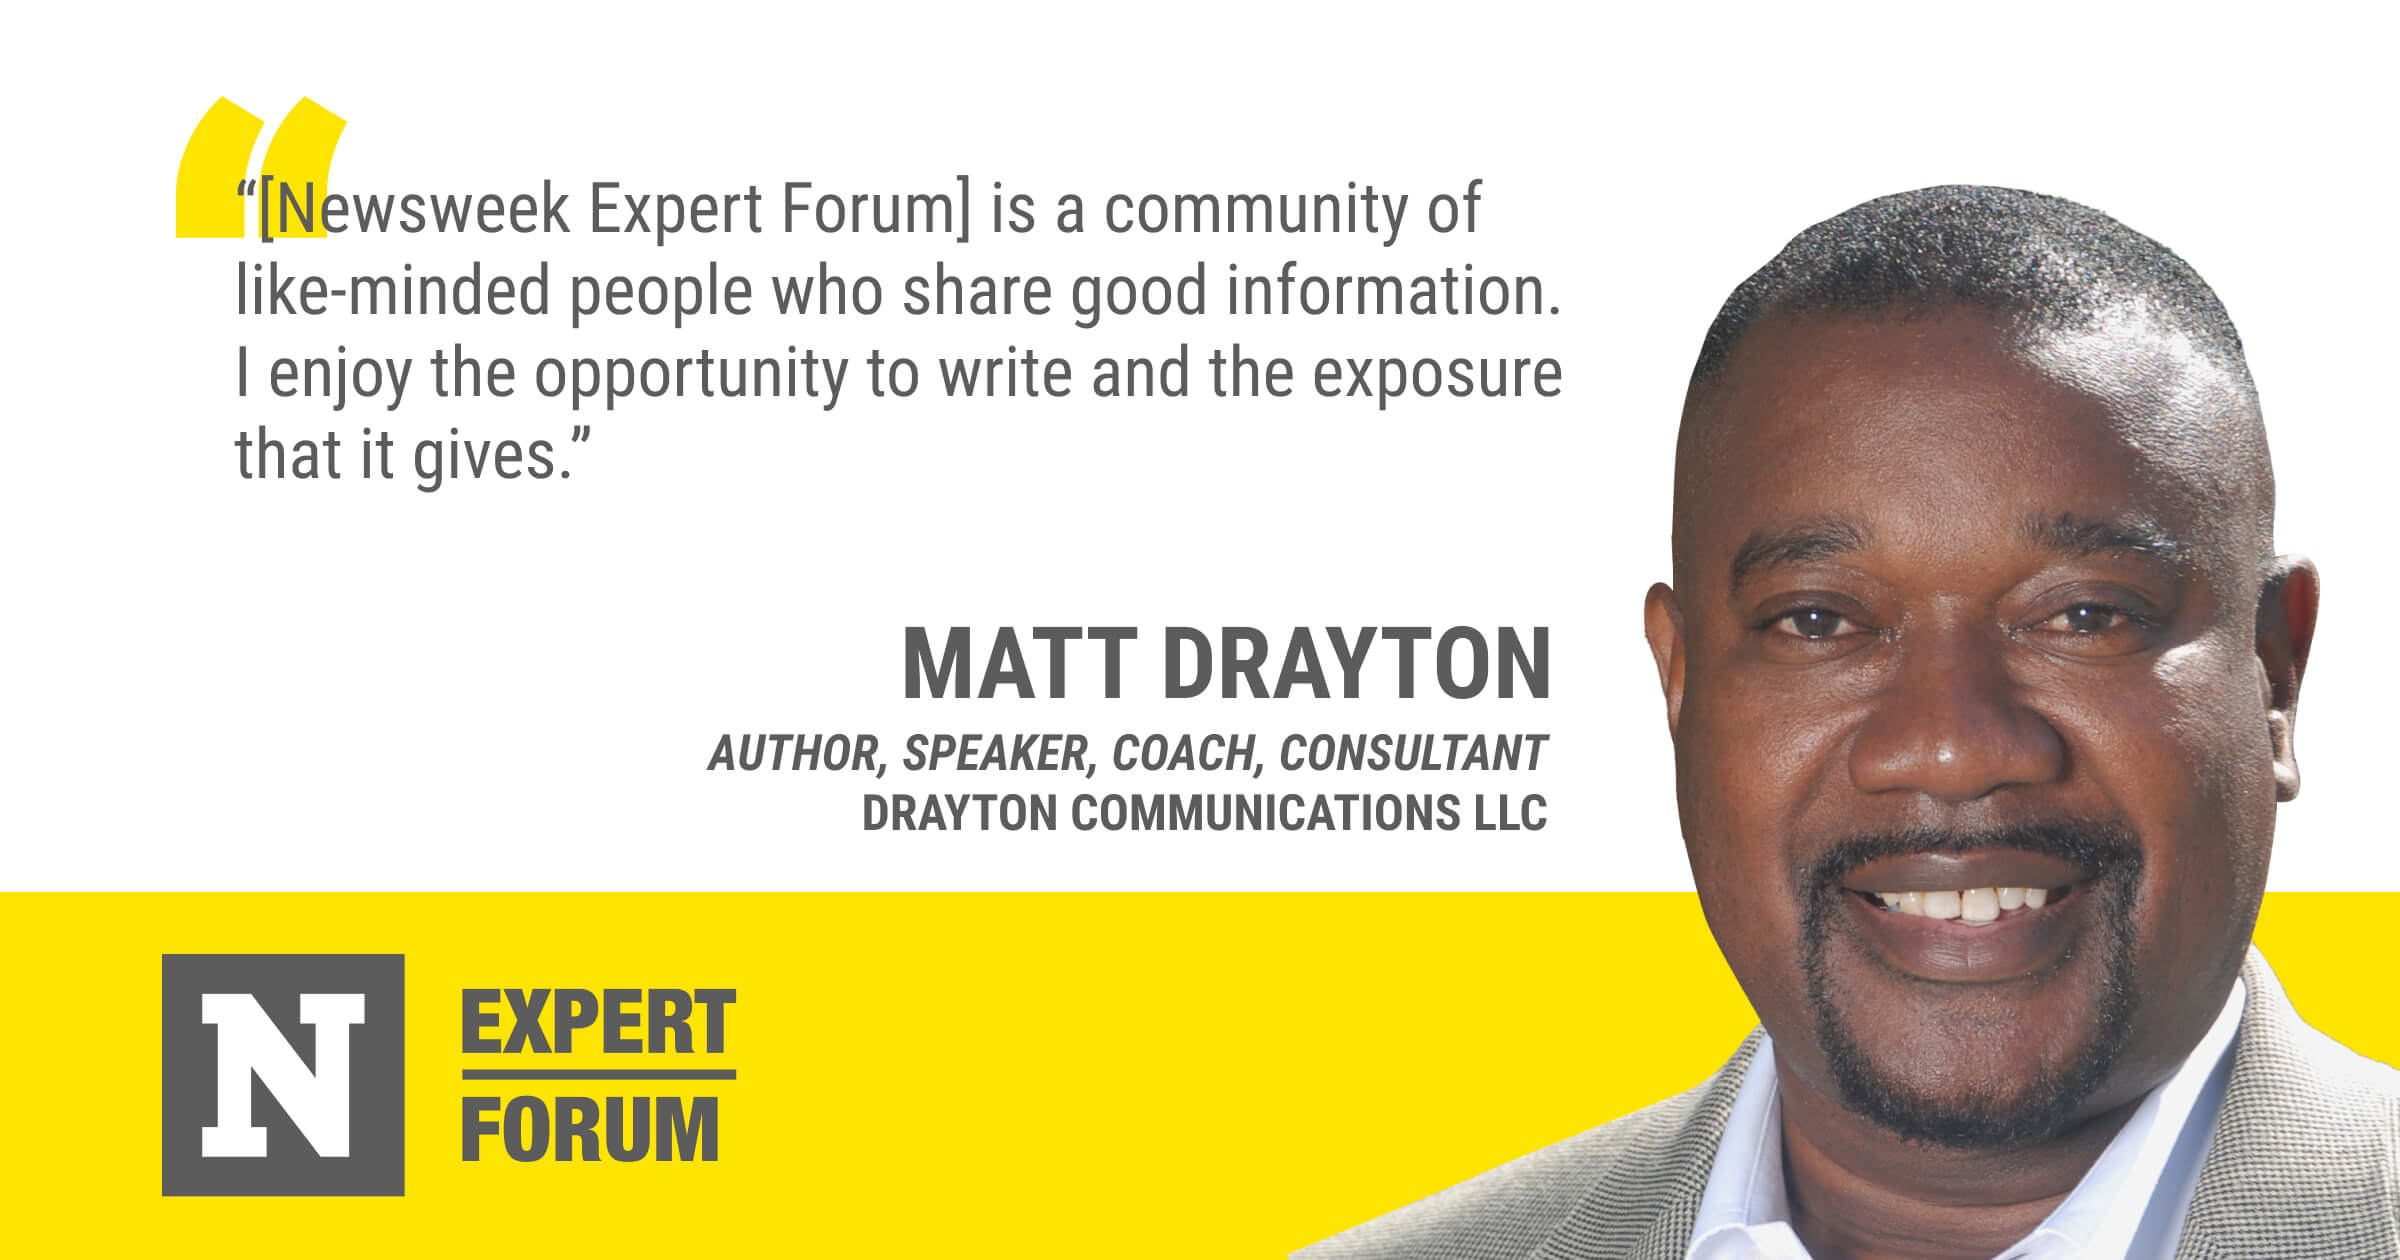 Newsweek Expert Forum member Matt Drayton